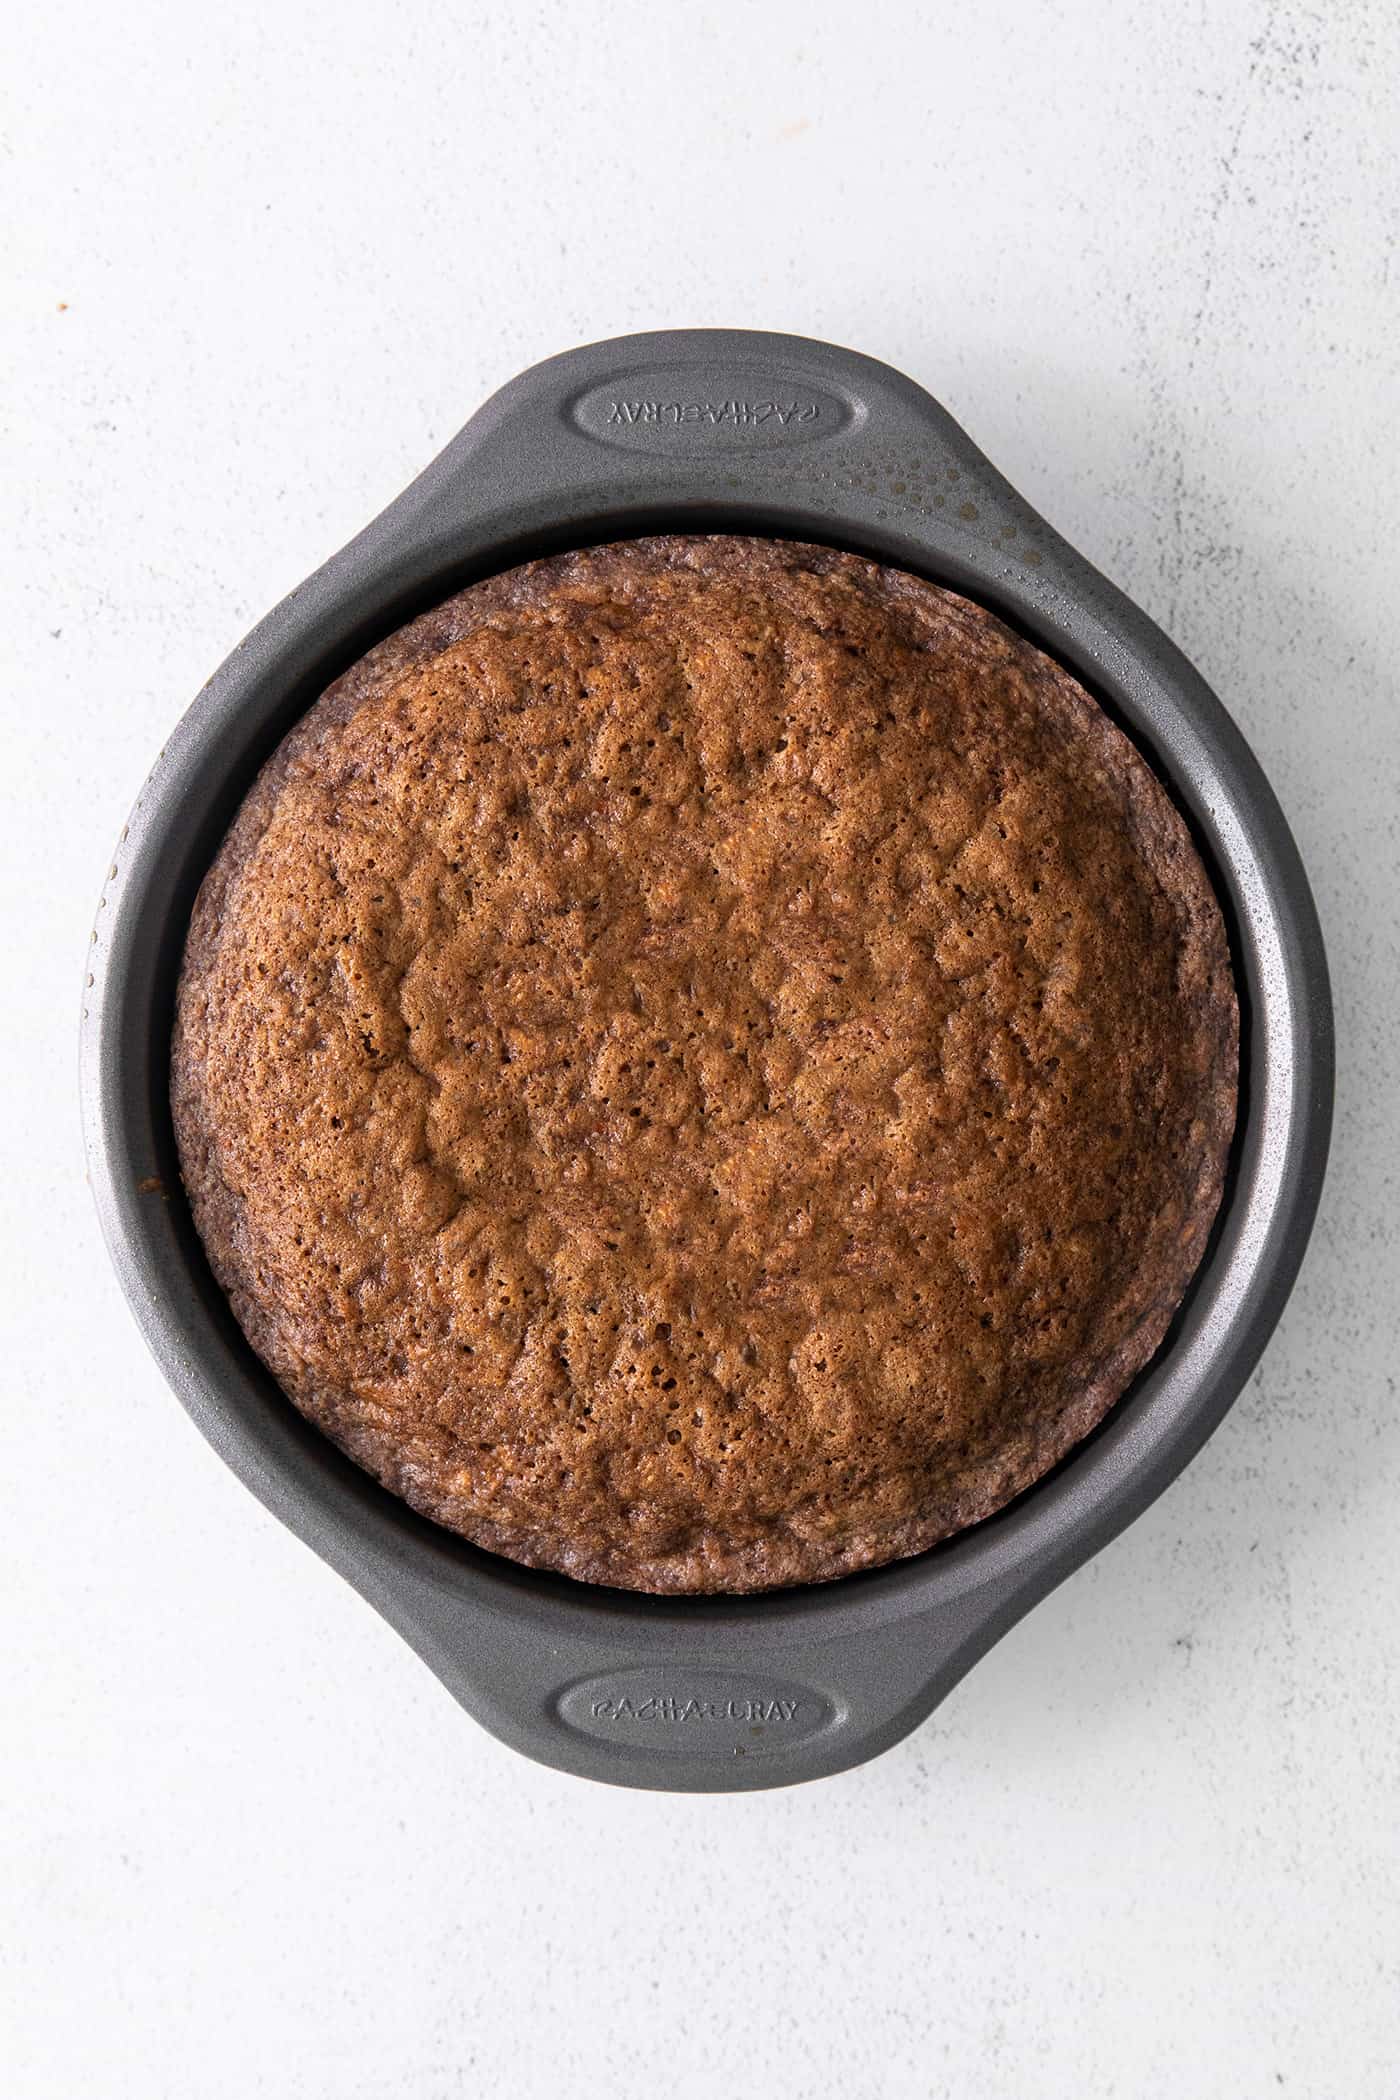 Carrot cake in a round cake pan